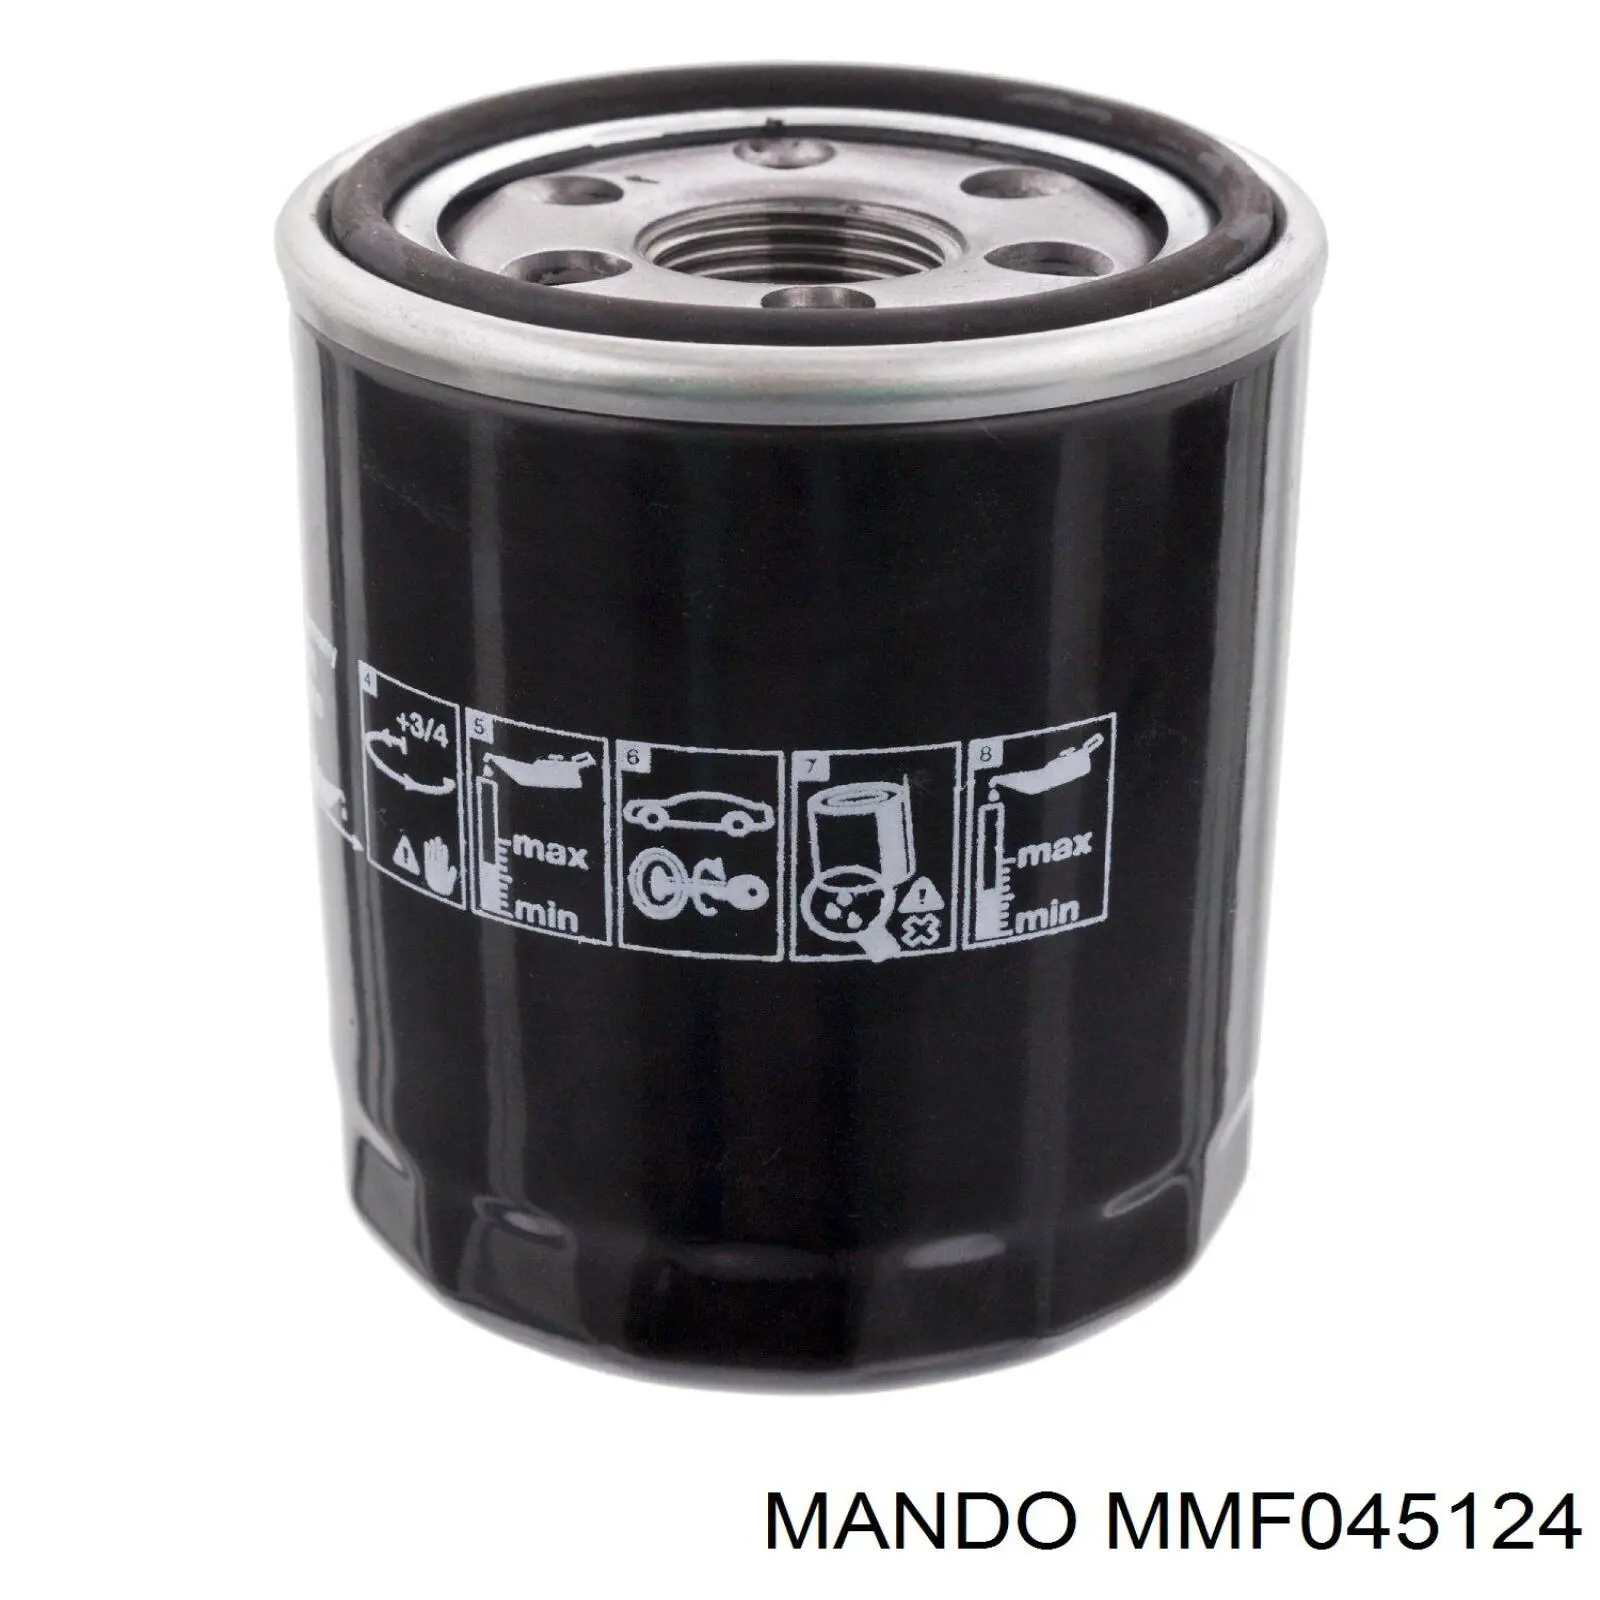 MMF045124 Mando масляный фильтр